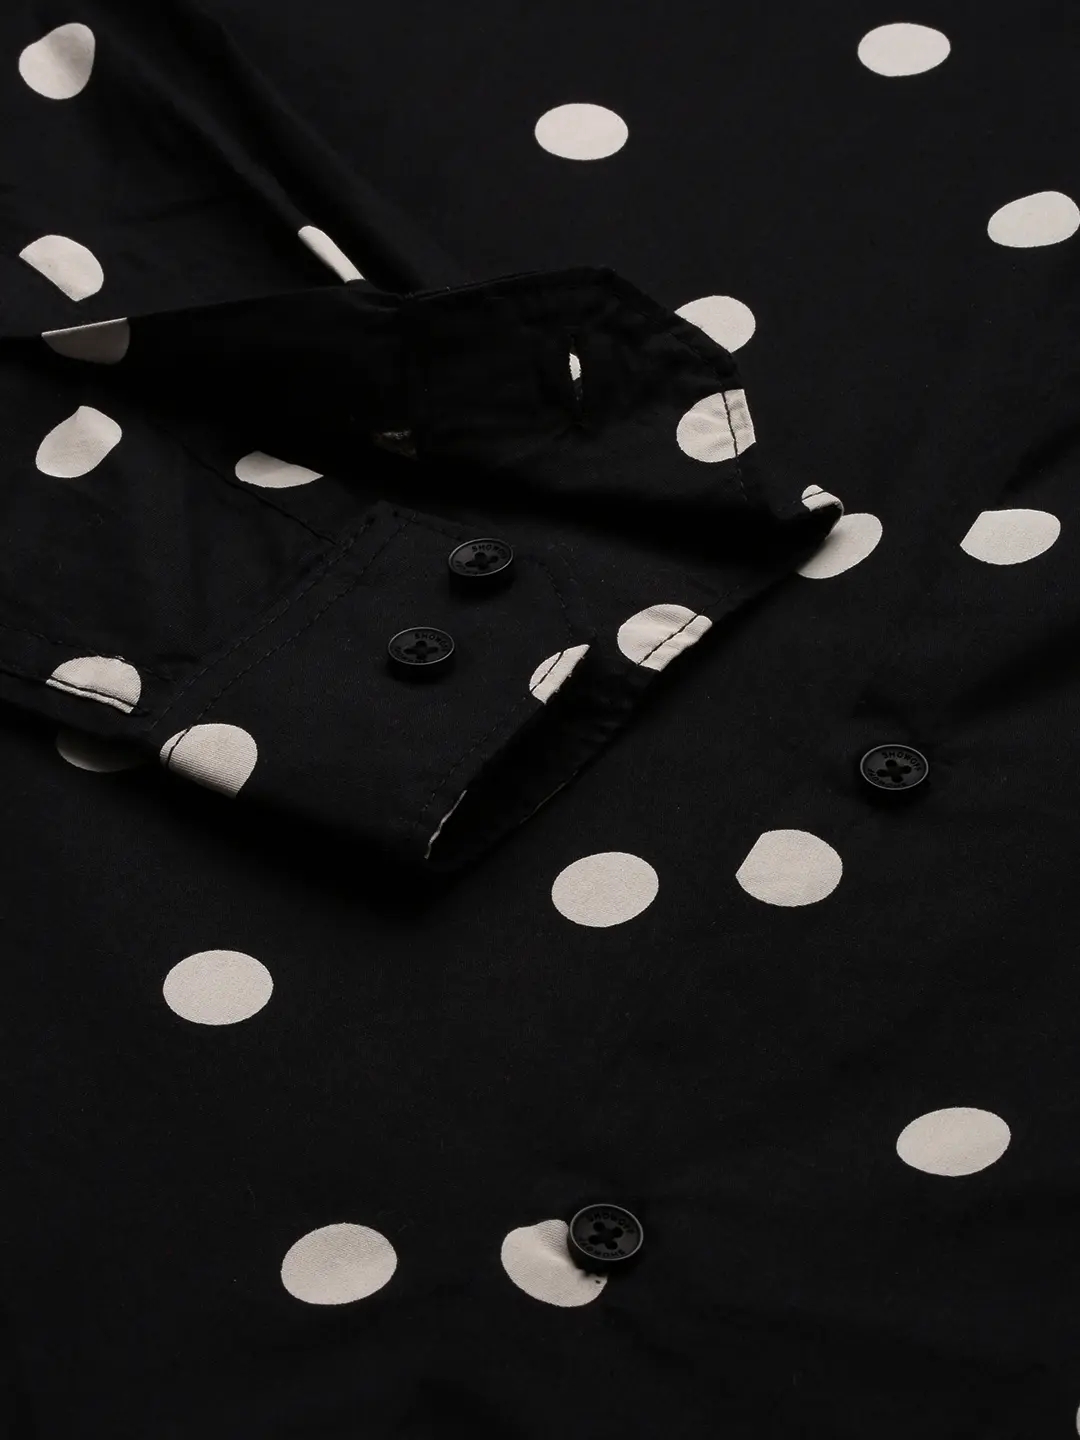 SHOWOFF Men's Spread Collar Black Printed Shirt